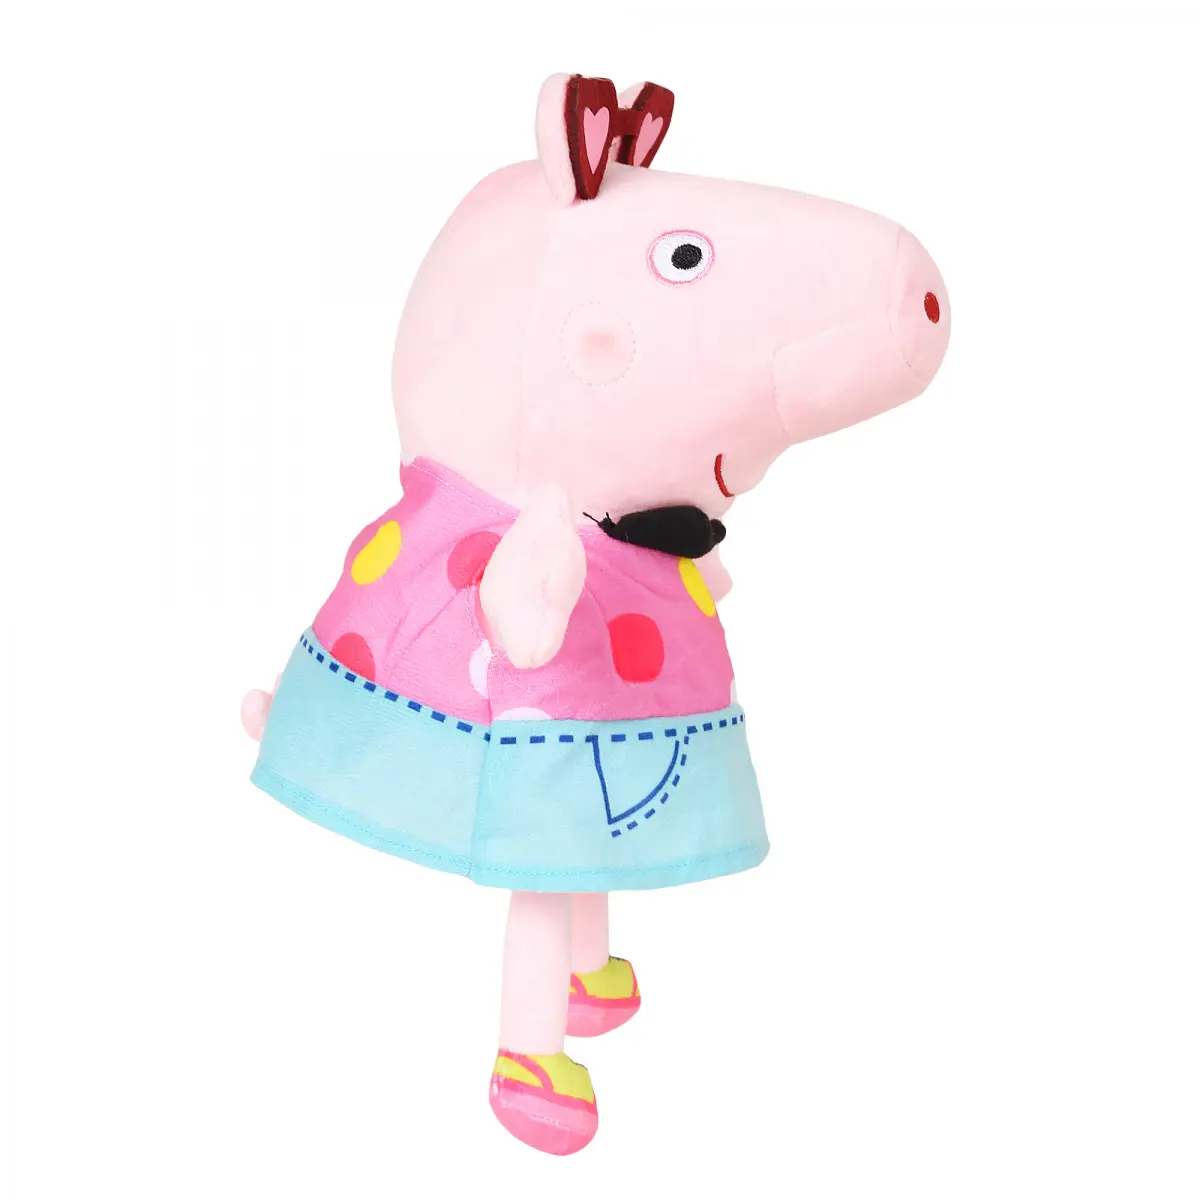 Peppa Pig Fancy Peppa Soft Toy for Kids, 30cm, 18M+, Multicolour